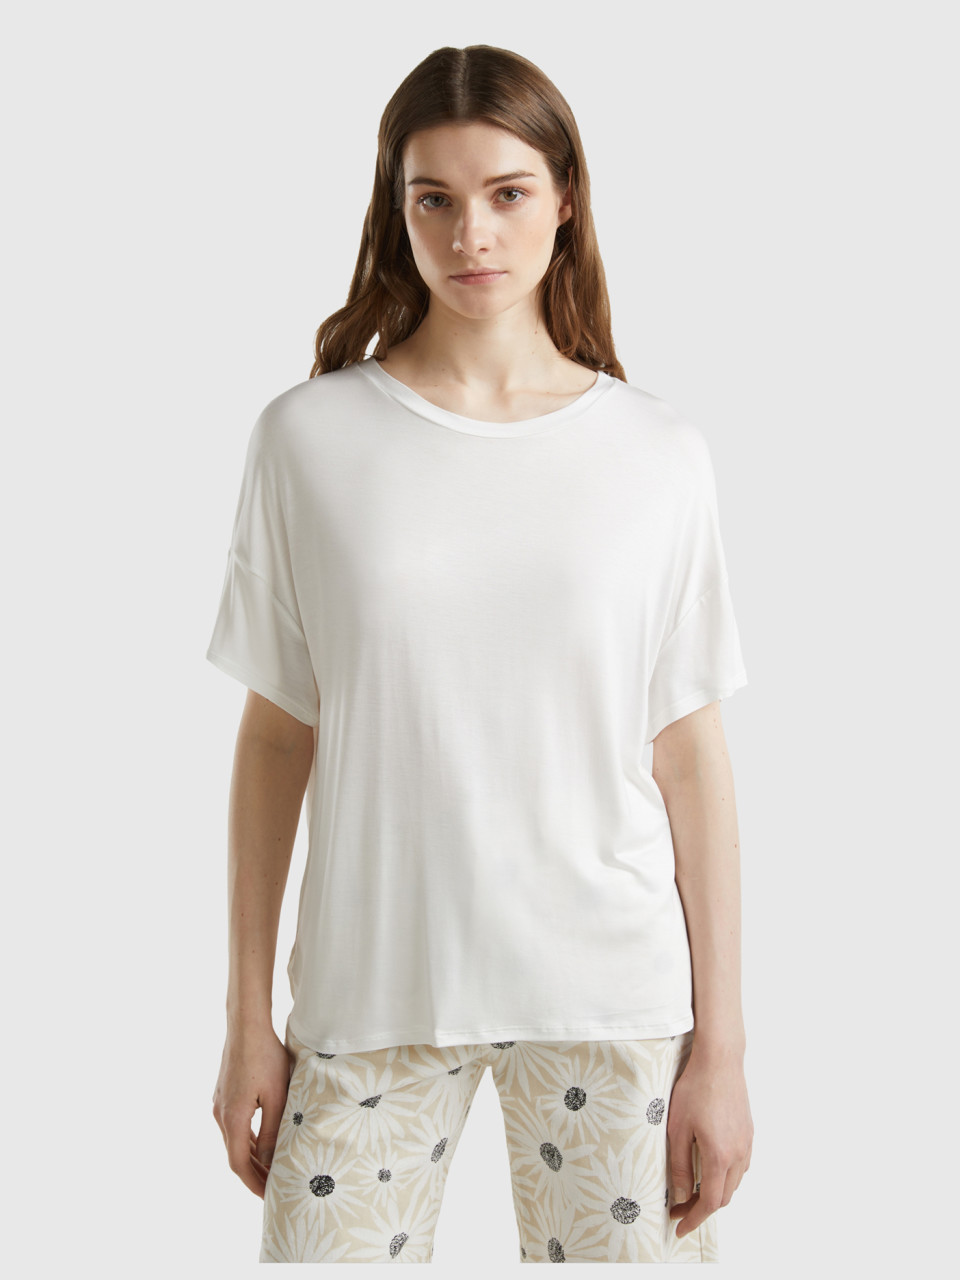 Benetton, T-shirt In Sustainable Stretch Viscose, Creamy White, Women